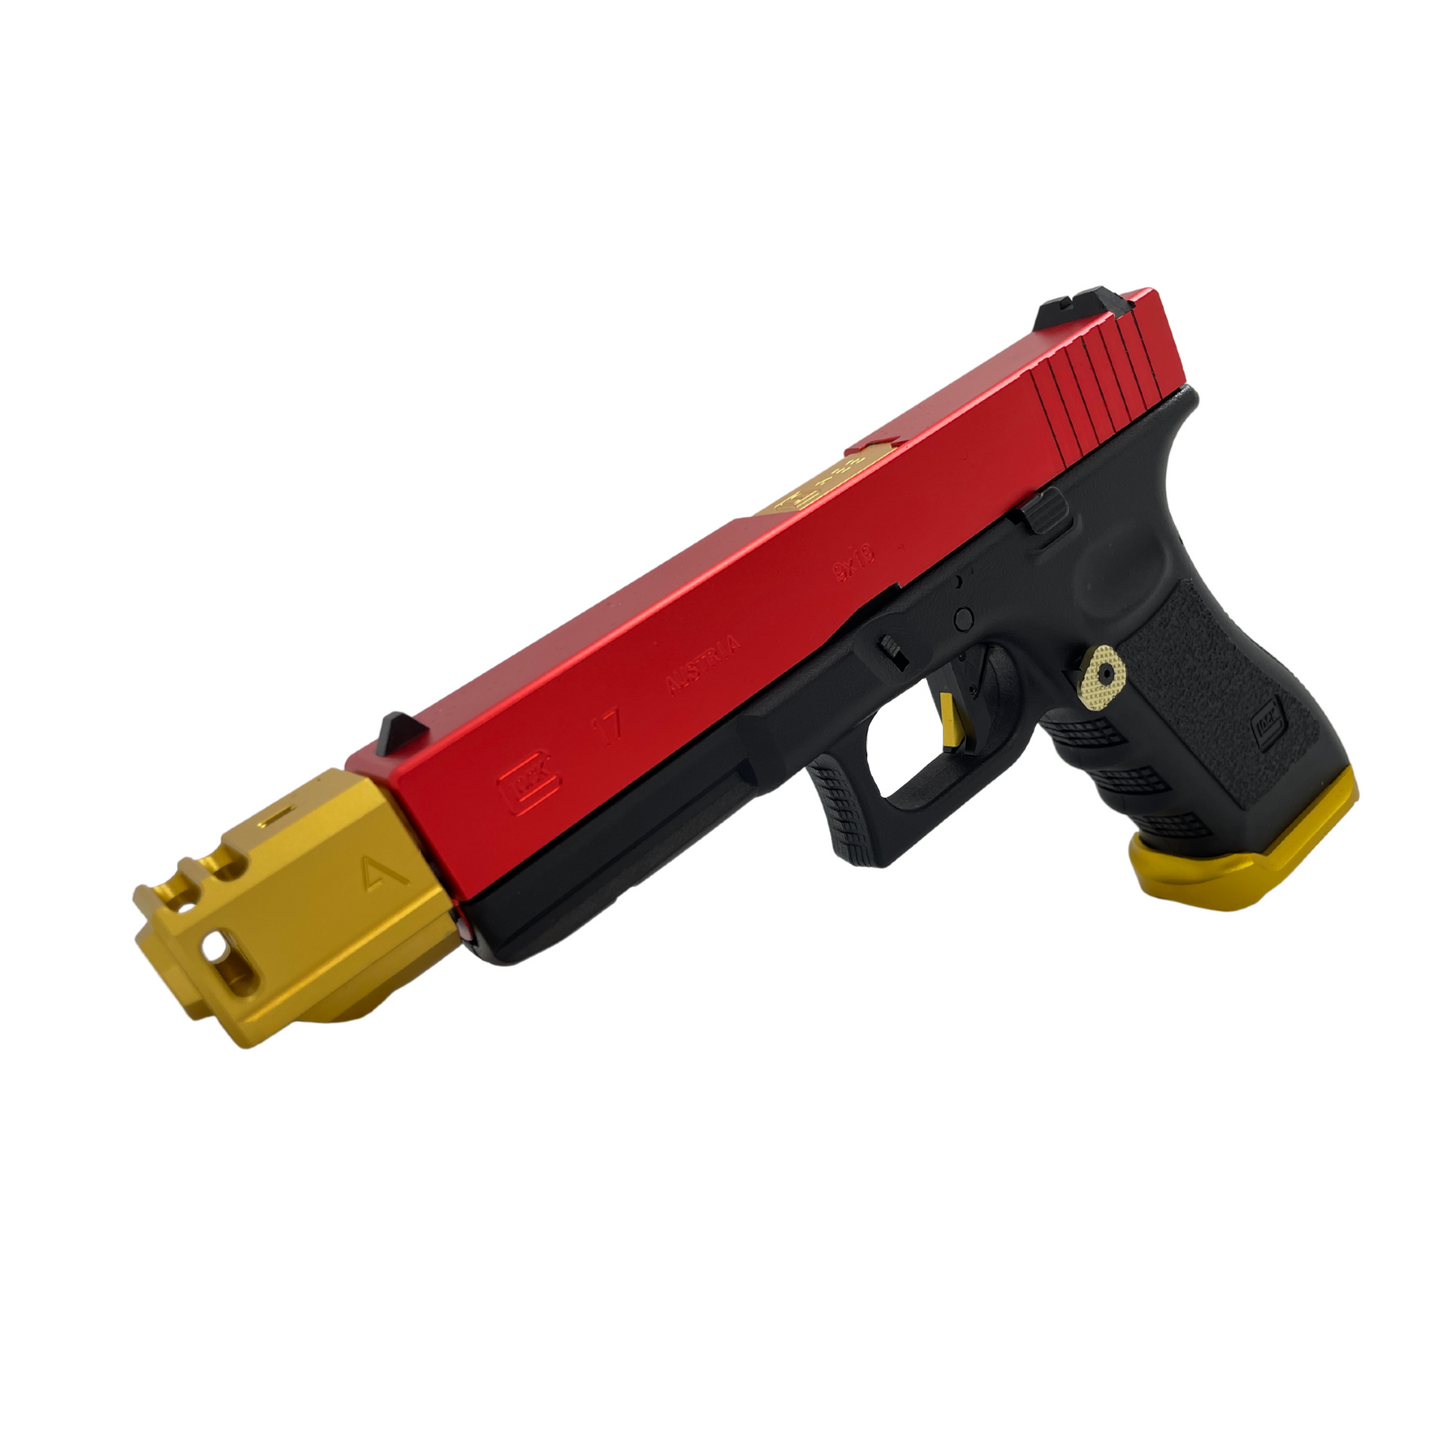 Custom "Fireball" G17 Metal Gas Blowback Pistol - Gel Blaster